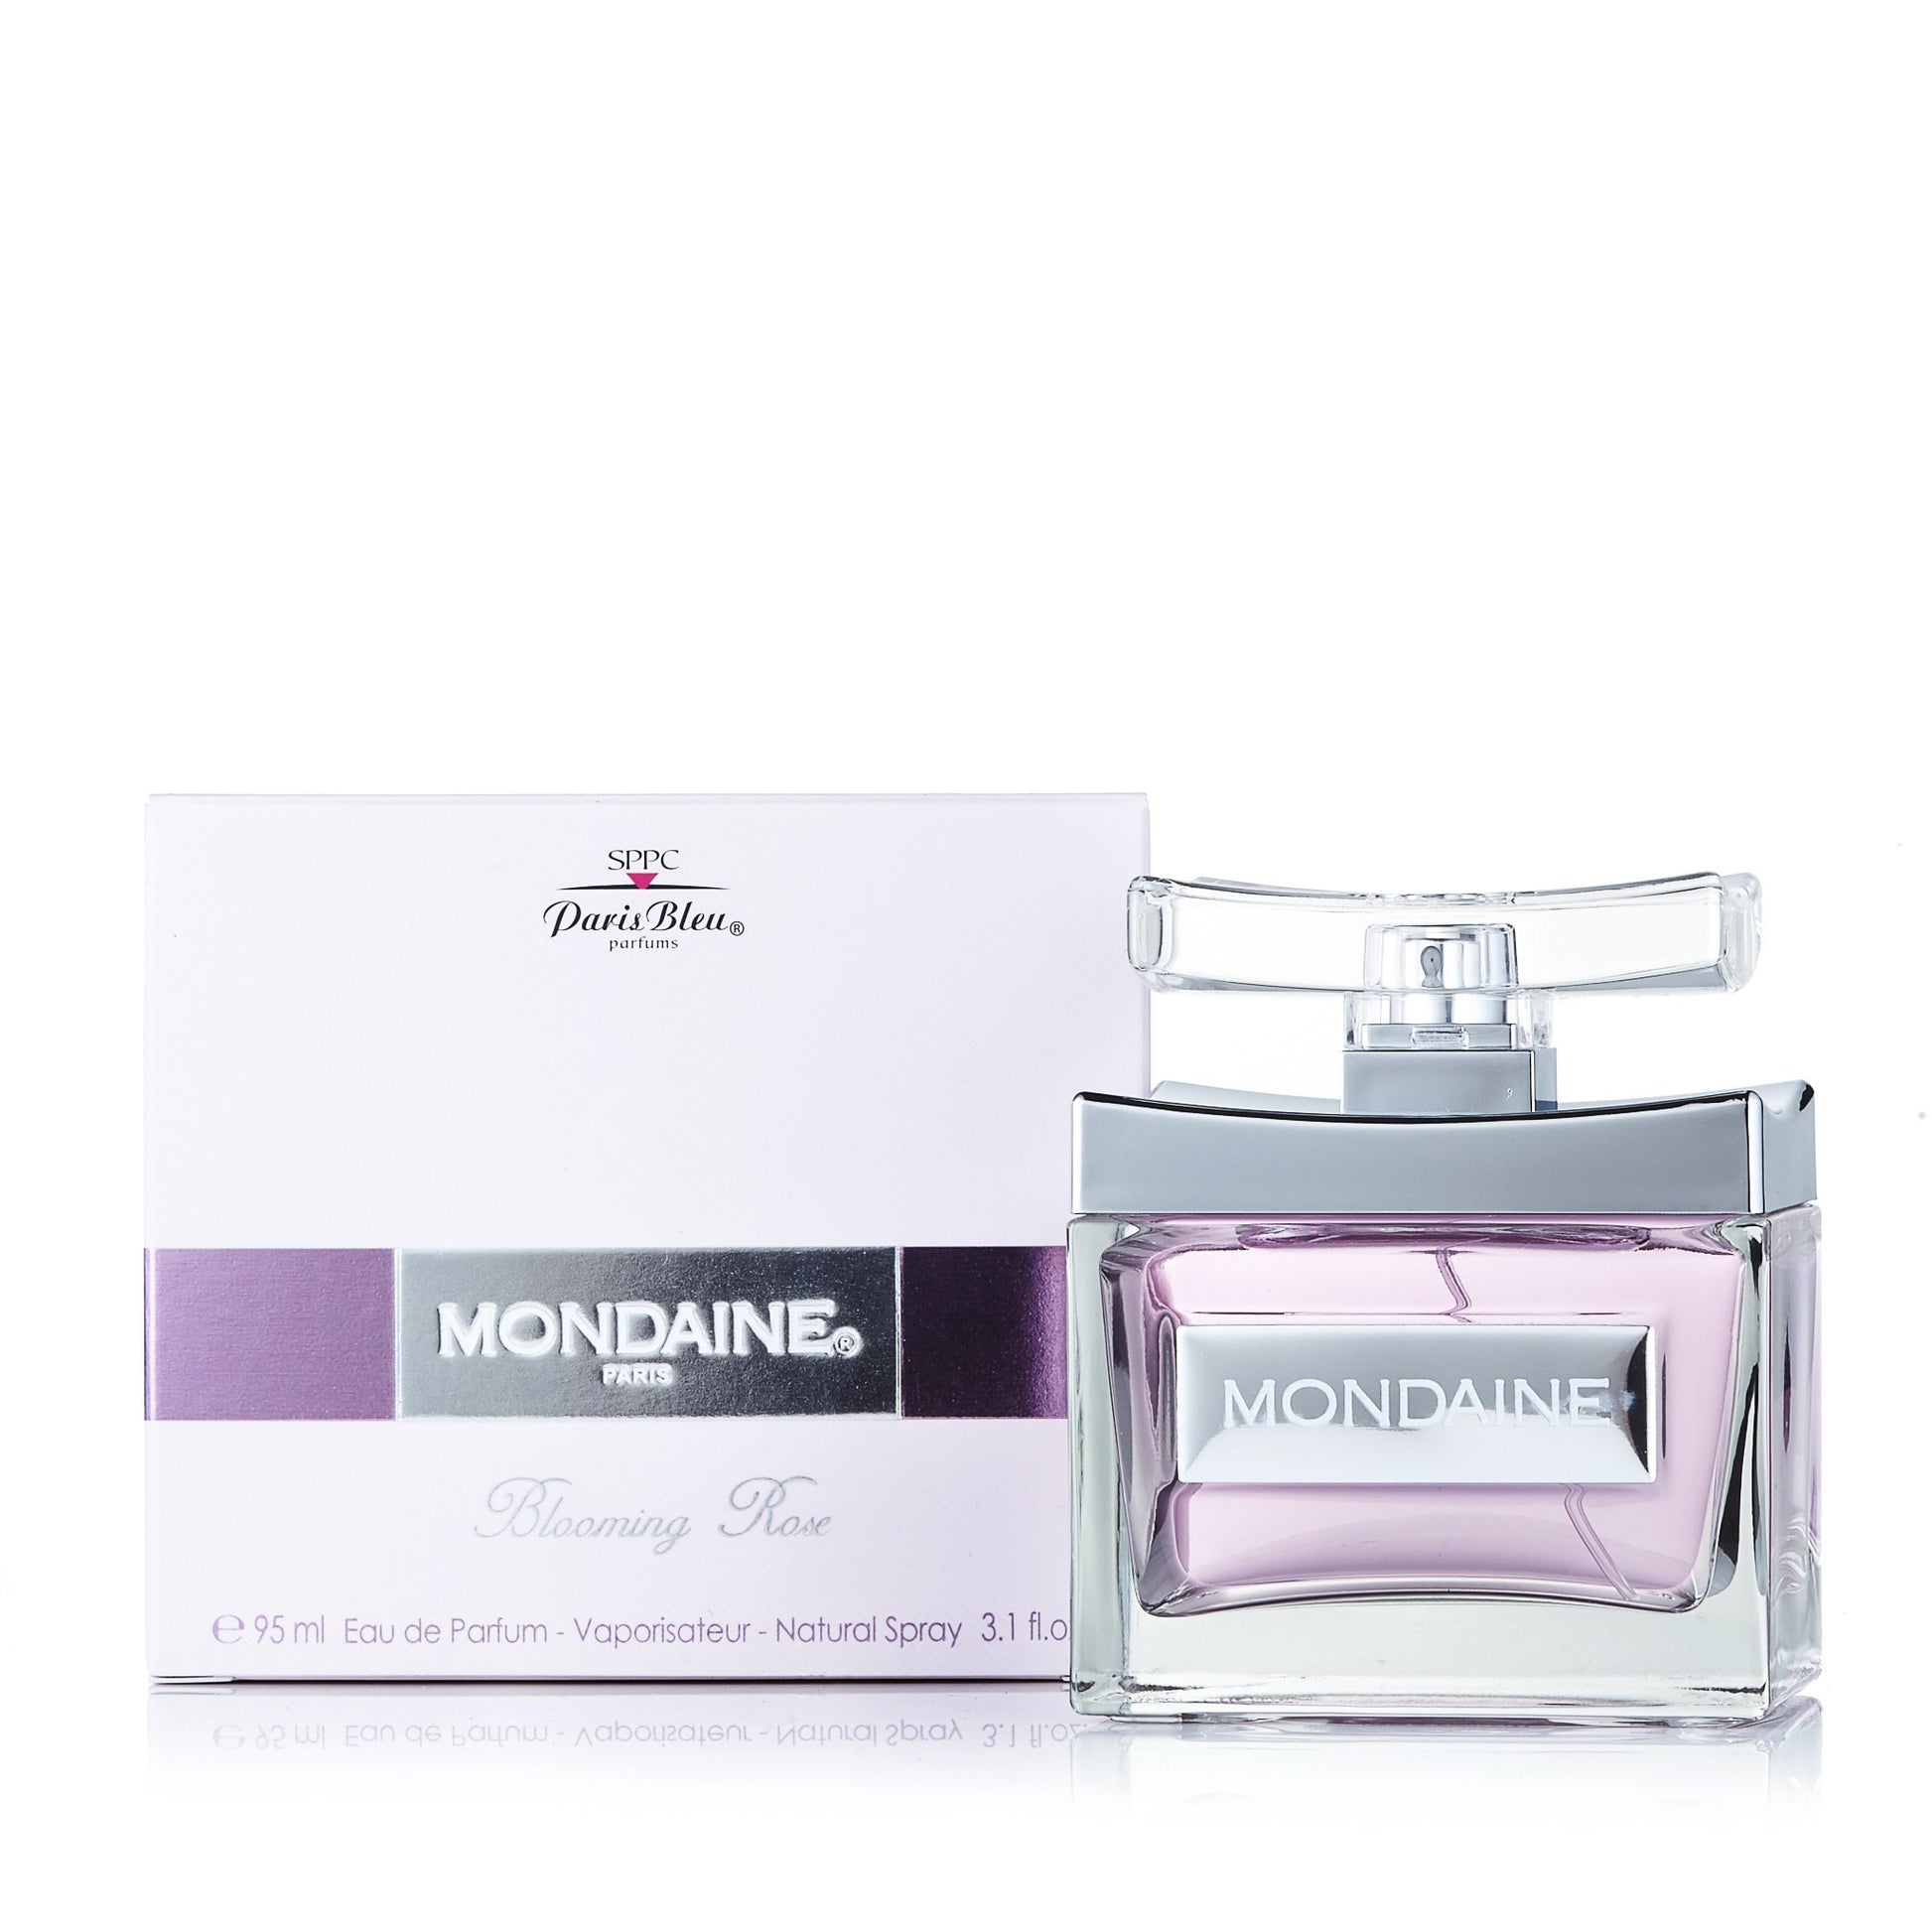 Mondaine Blooming Rose Eau de Parfum Spray for Women 3.1 oz. Click to open in modal